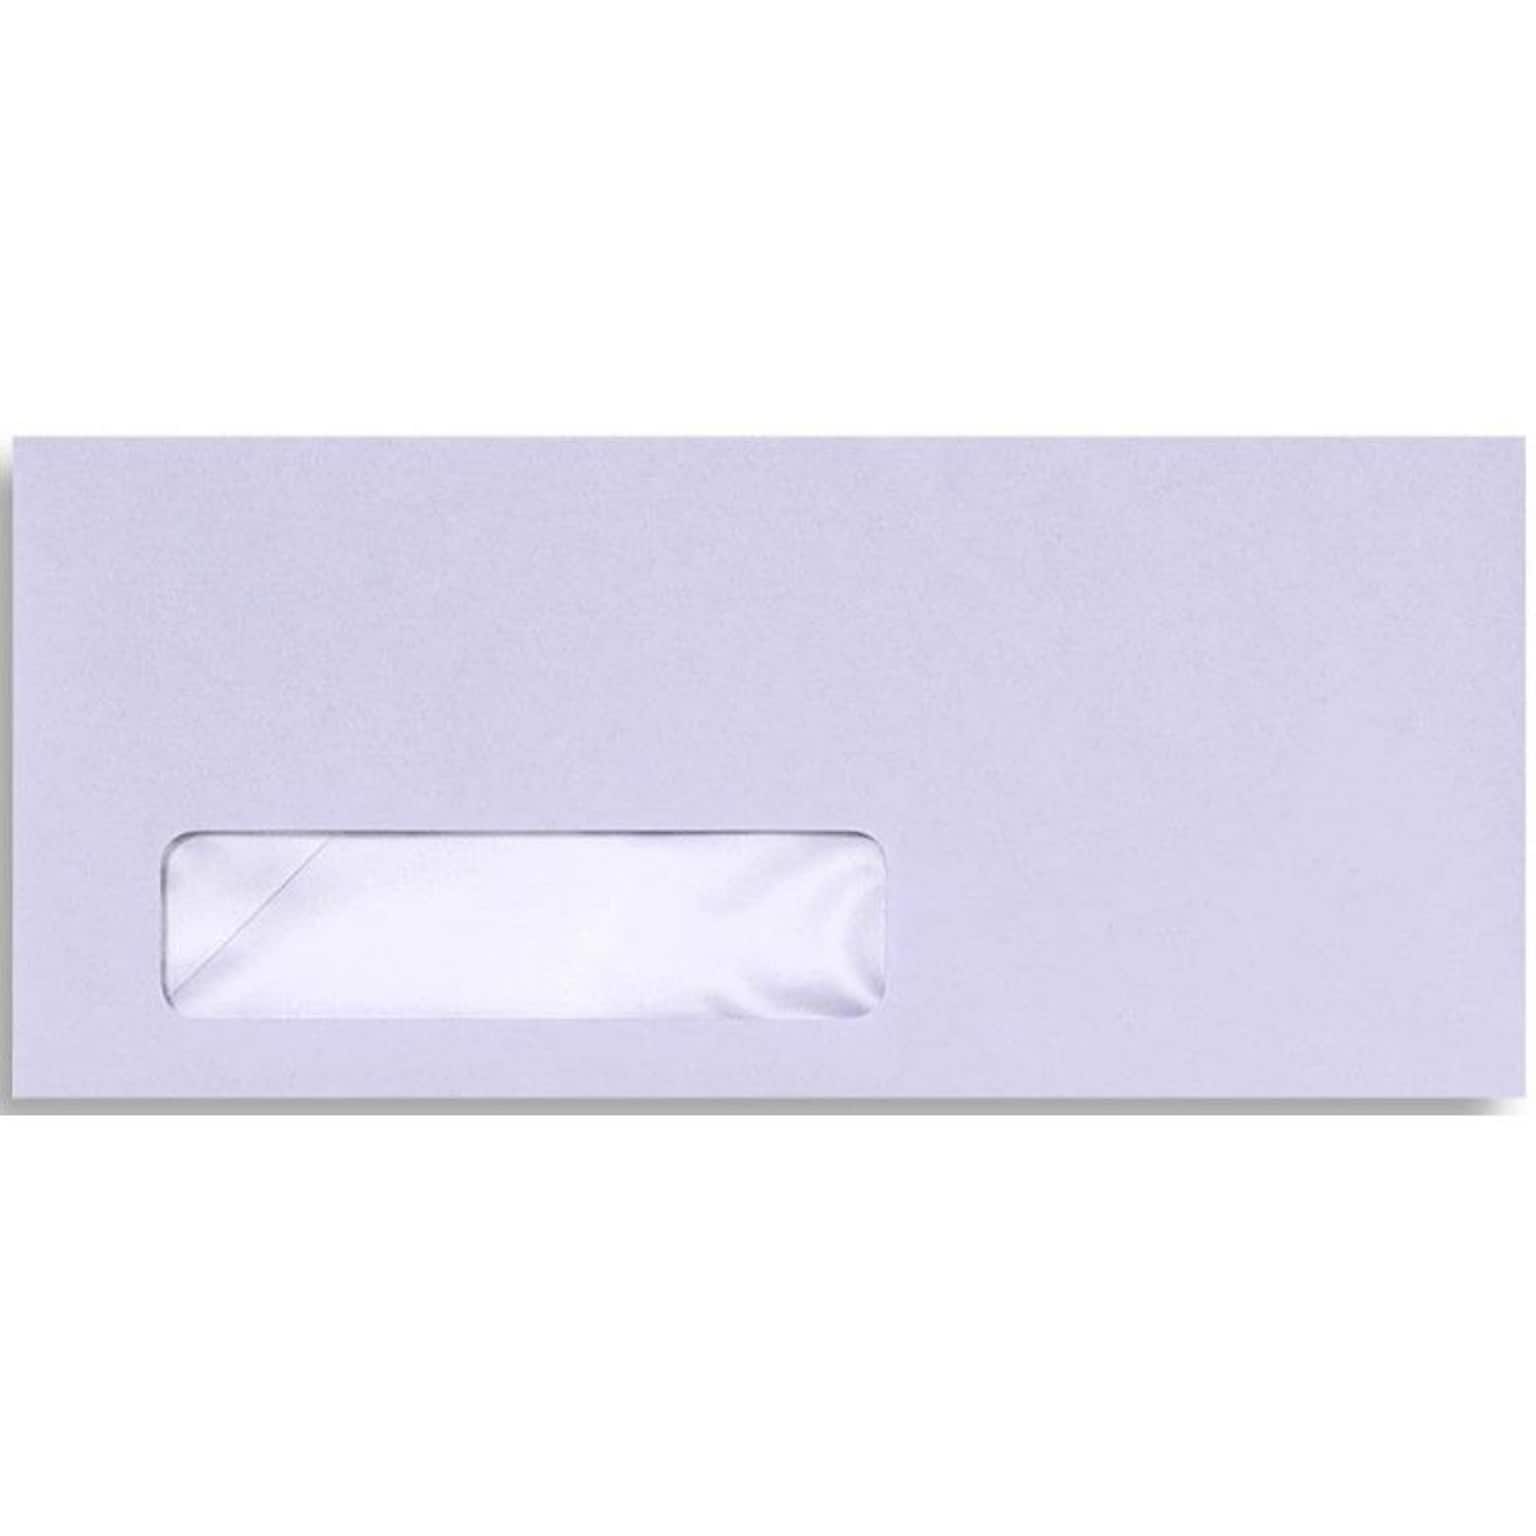 LUX Pastels Moistenable Glue #10 Window Envelope, 4 1/2 x 9 1/2, Orchid Purple, 500/Box (28815-500)